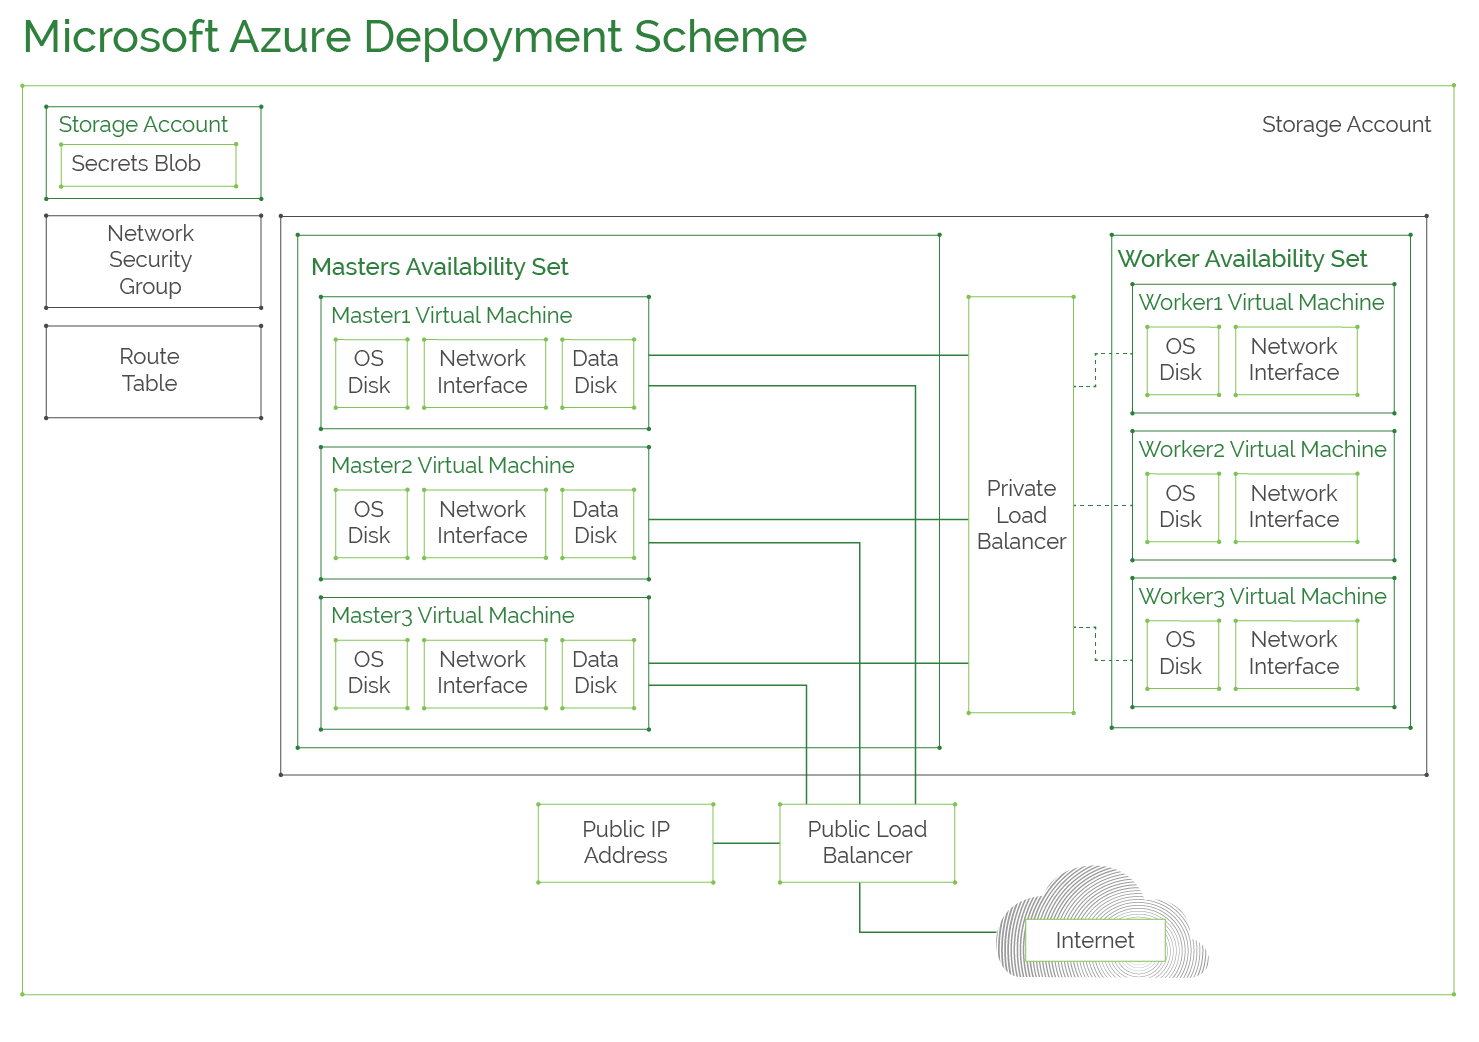 Microsoft Azure Service Deployment